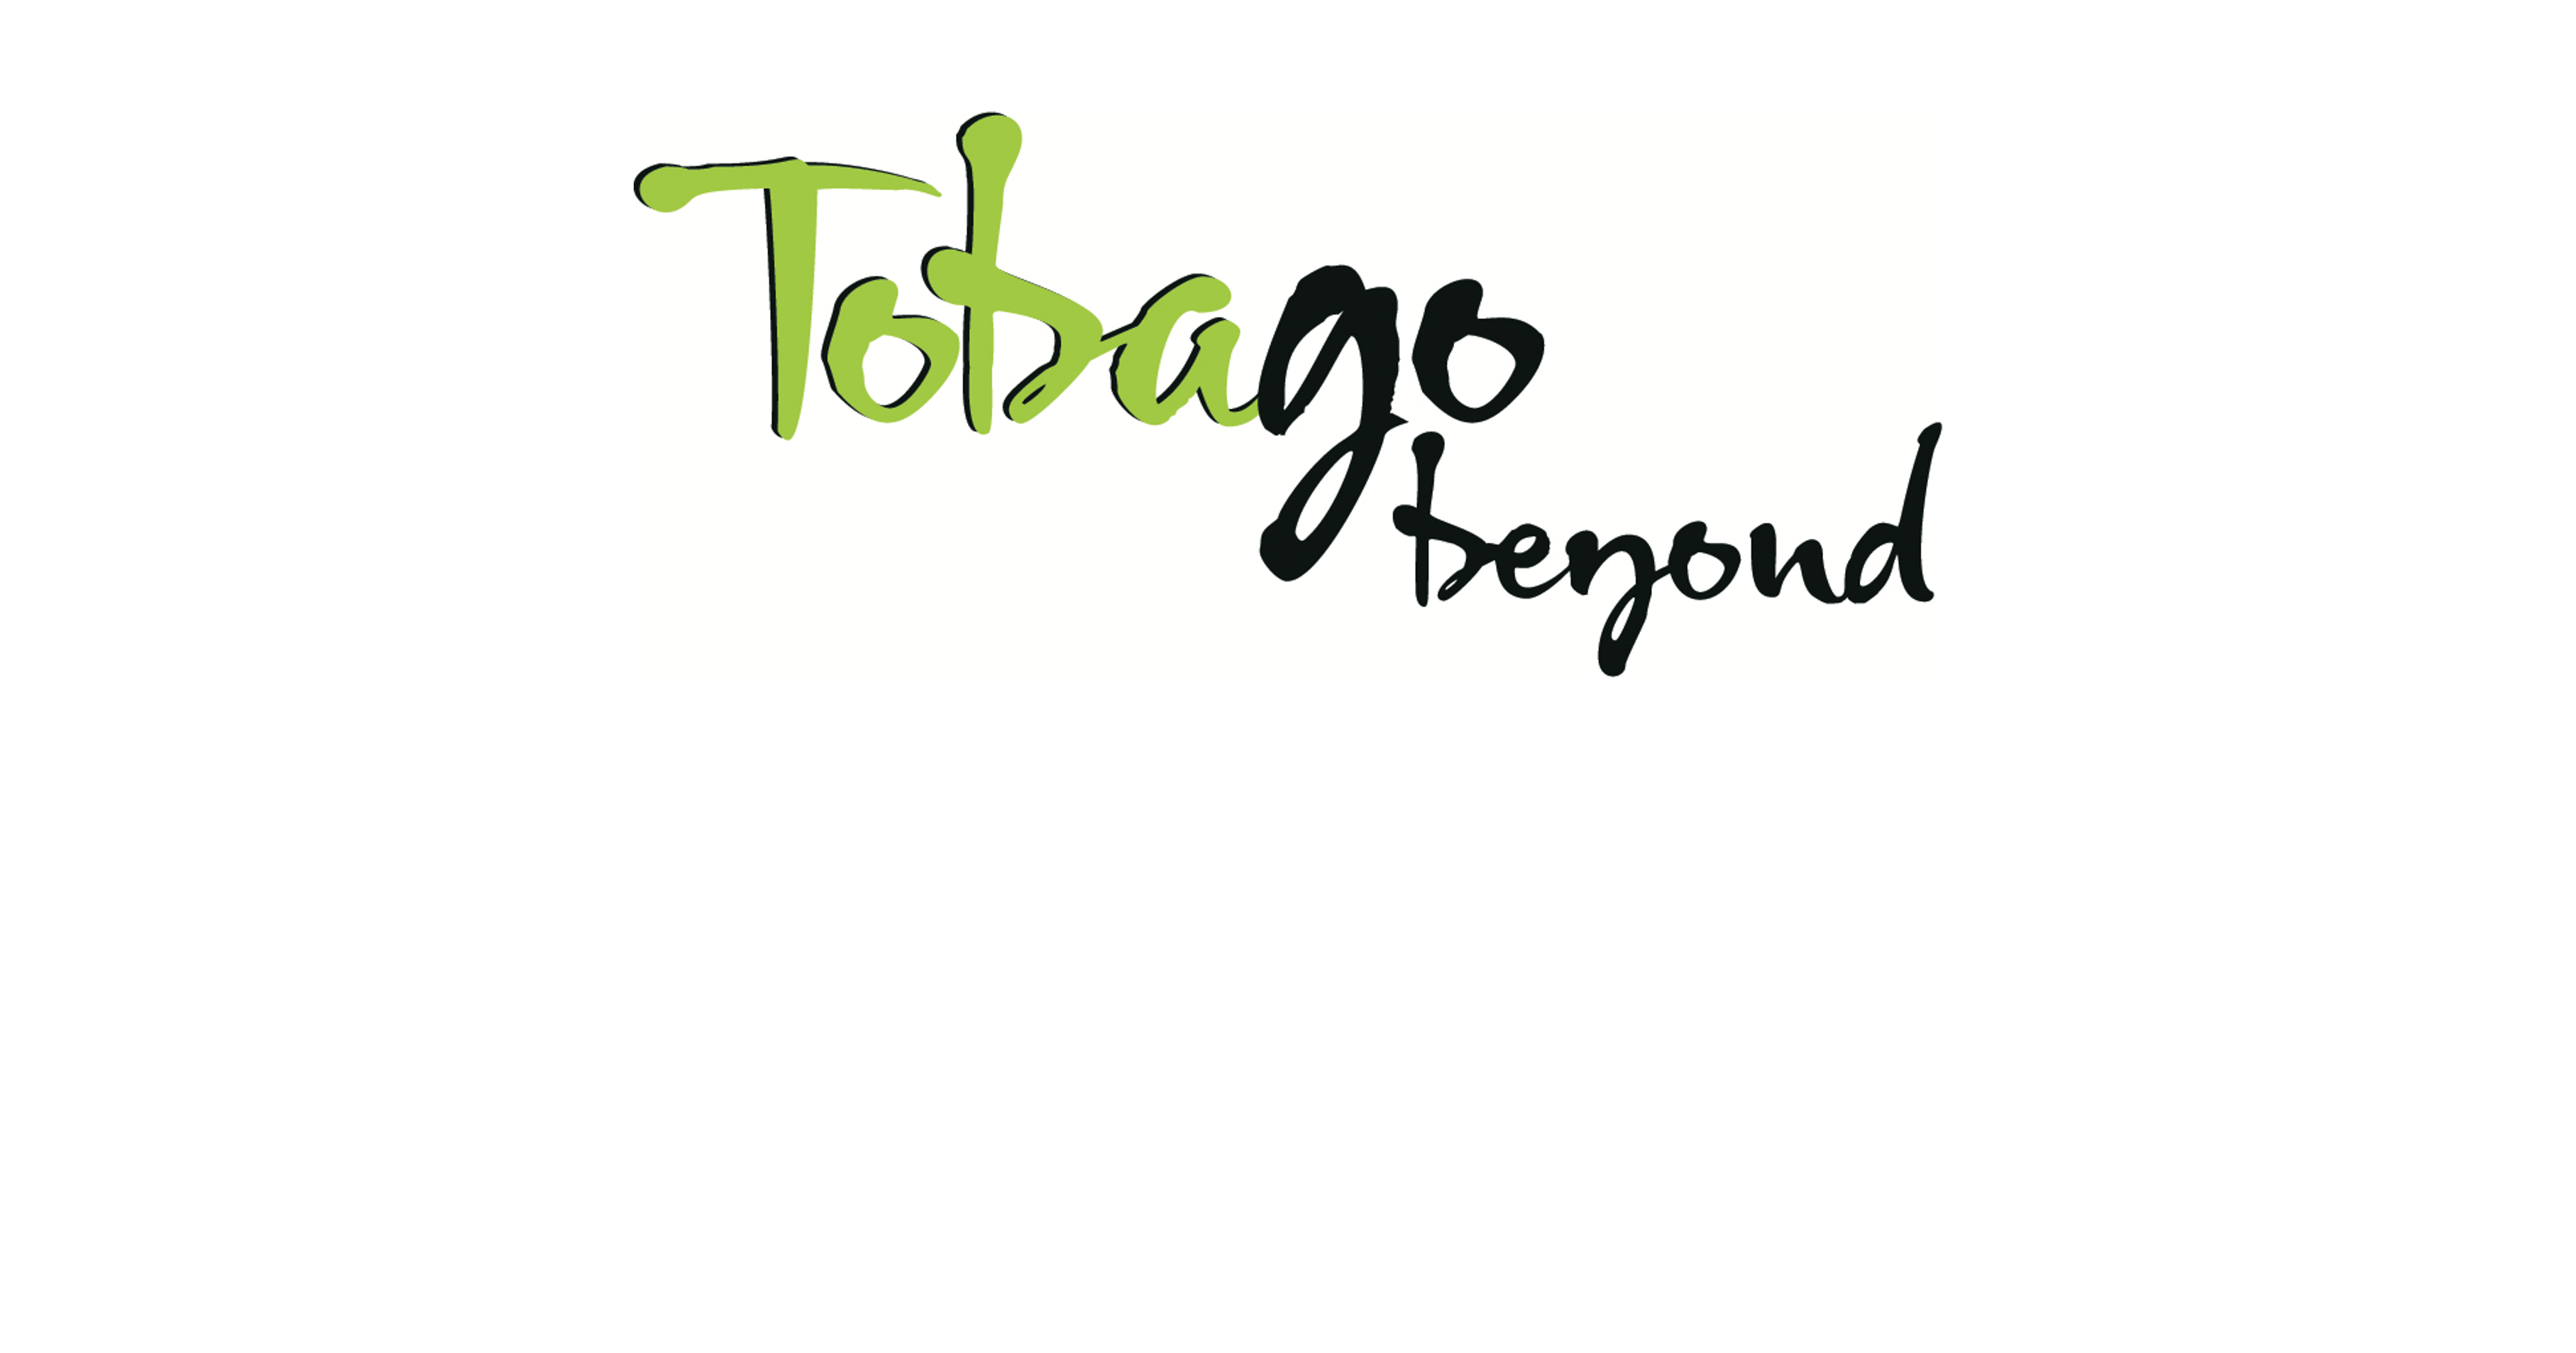 Tobago logo